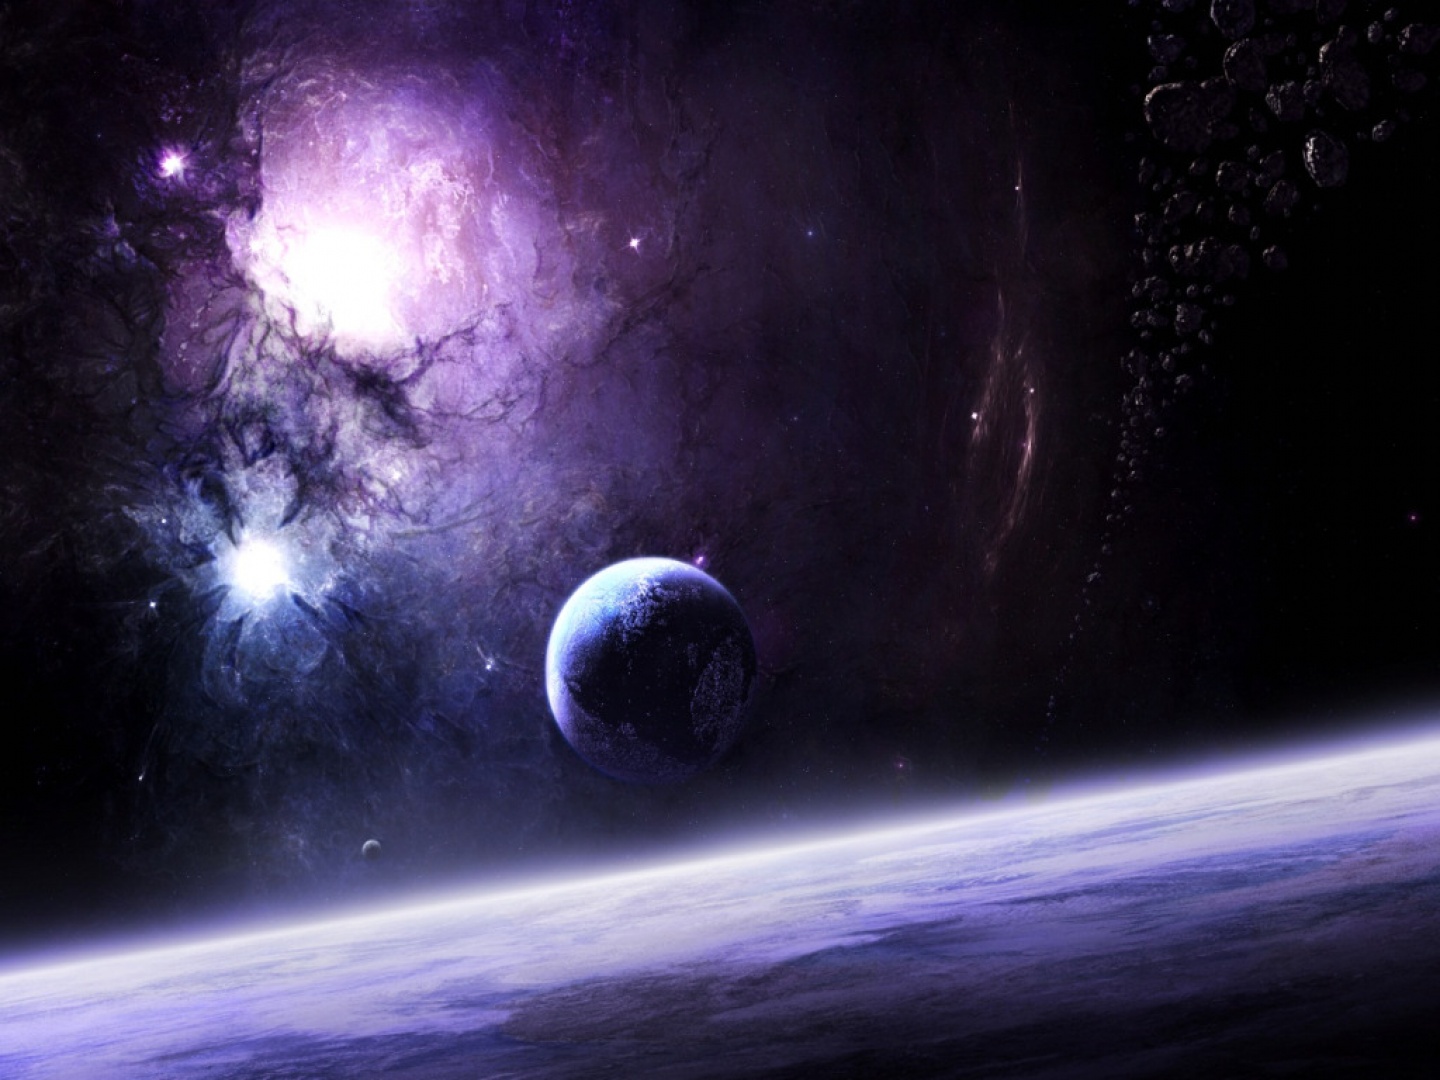 universo fondo de pantalla,espacio exterior,atmósfera,objeto astronómico,planeta,universo